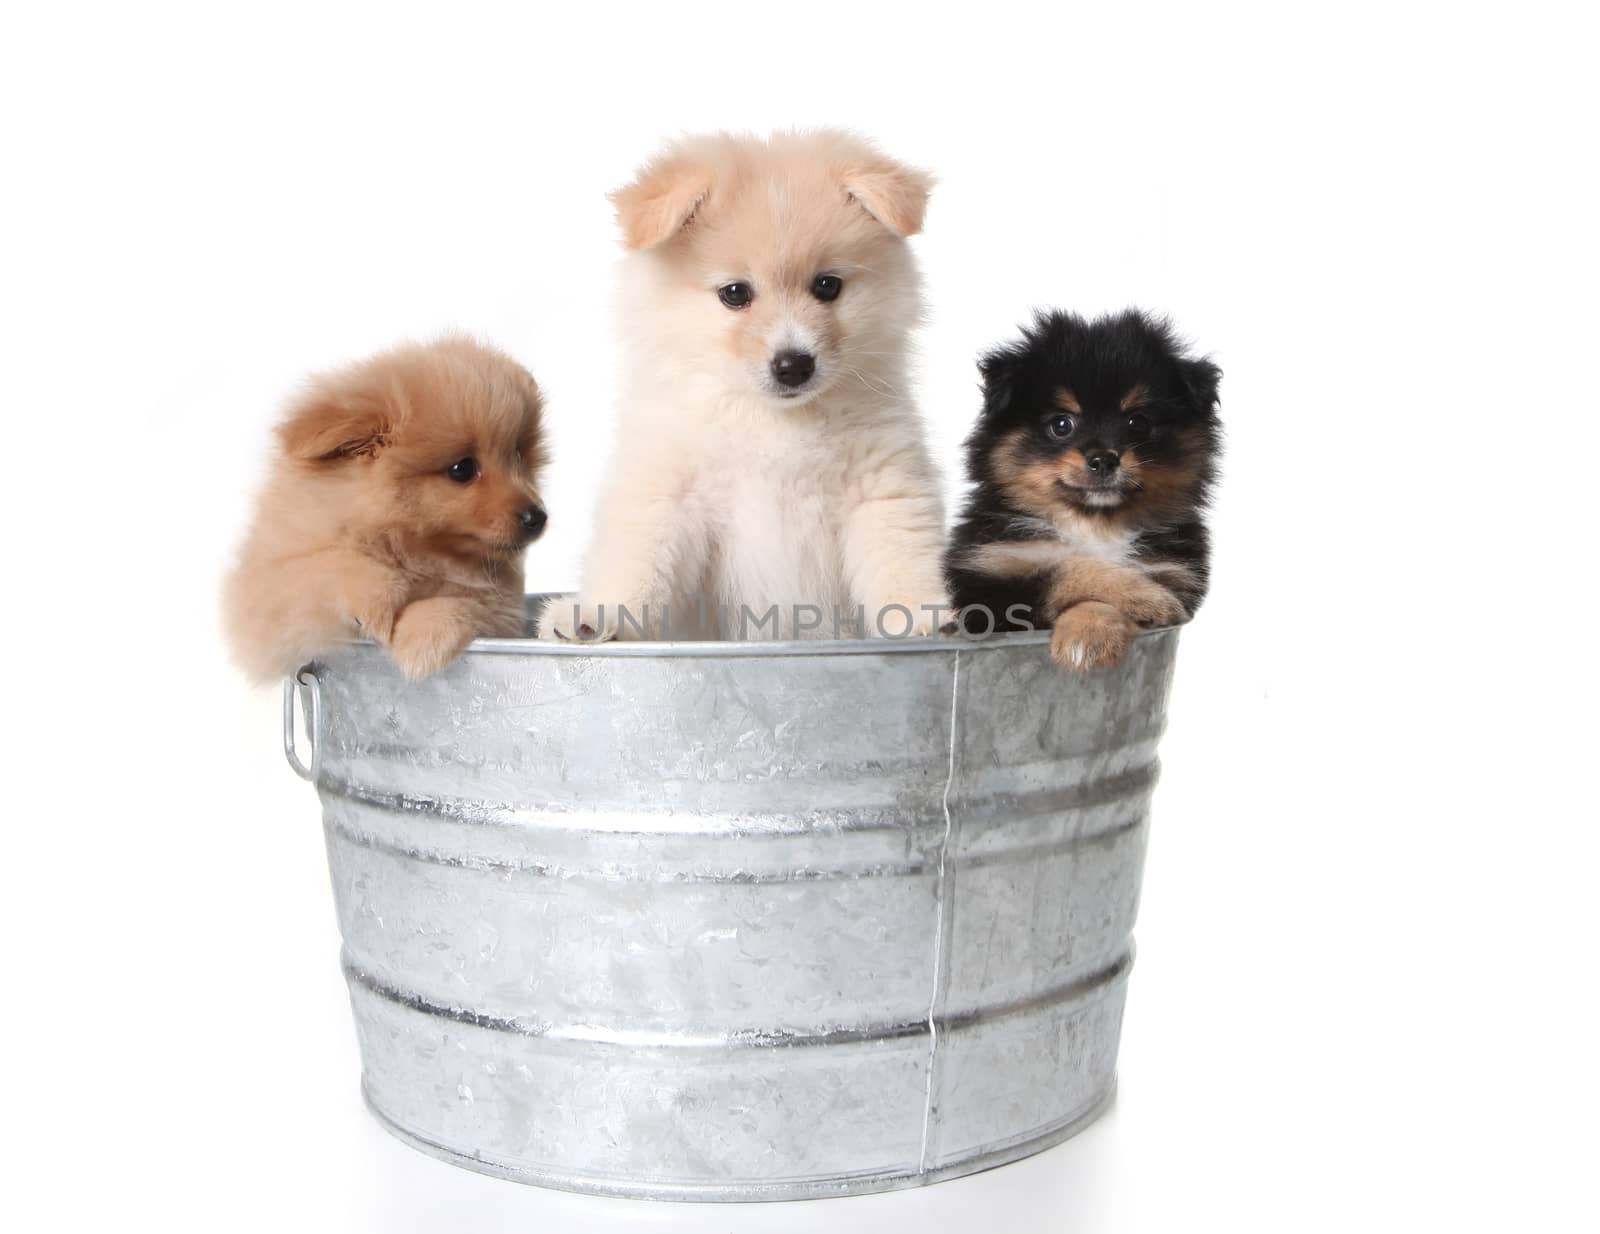 Cute Pomeranian Puppies in a Metal Washtub  by tobkatrina